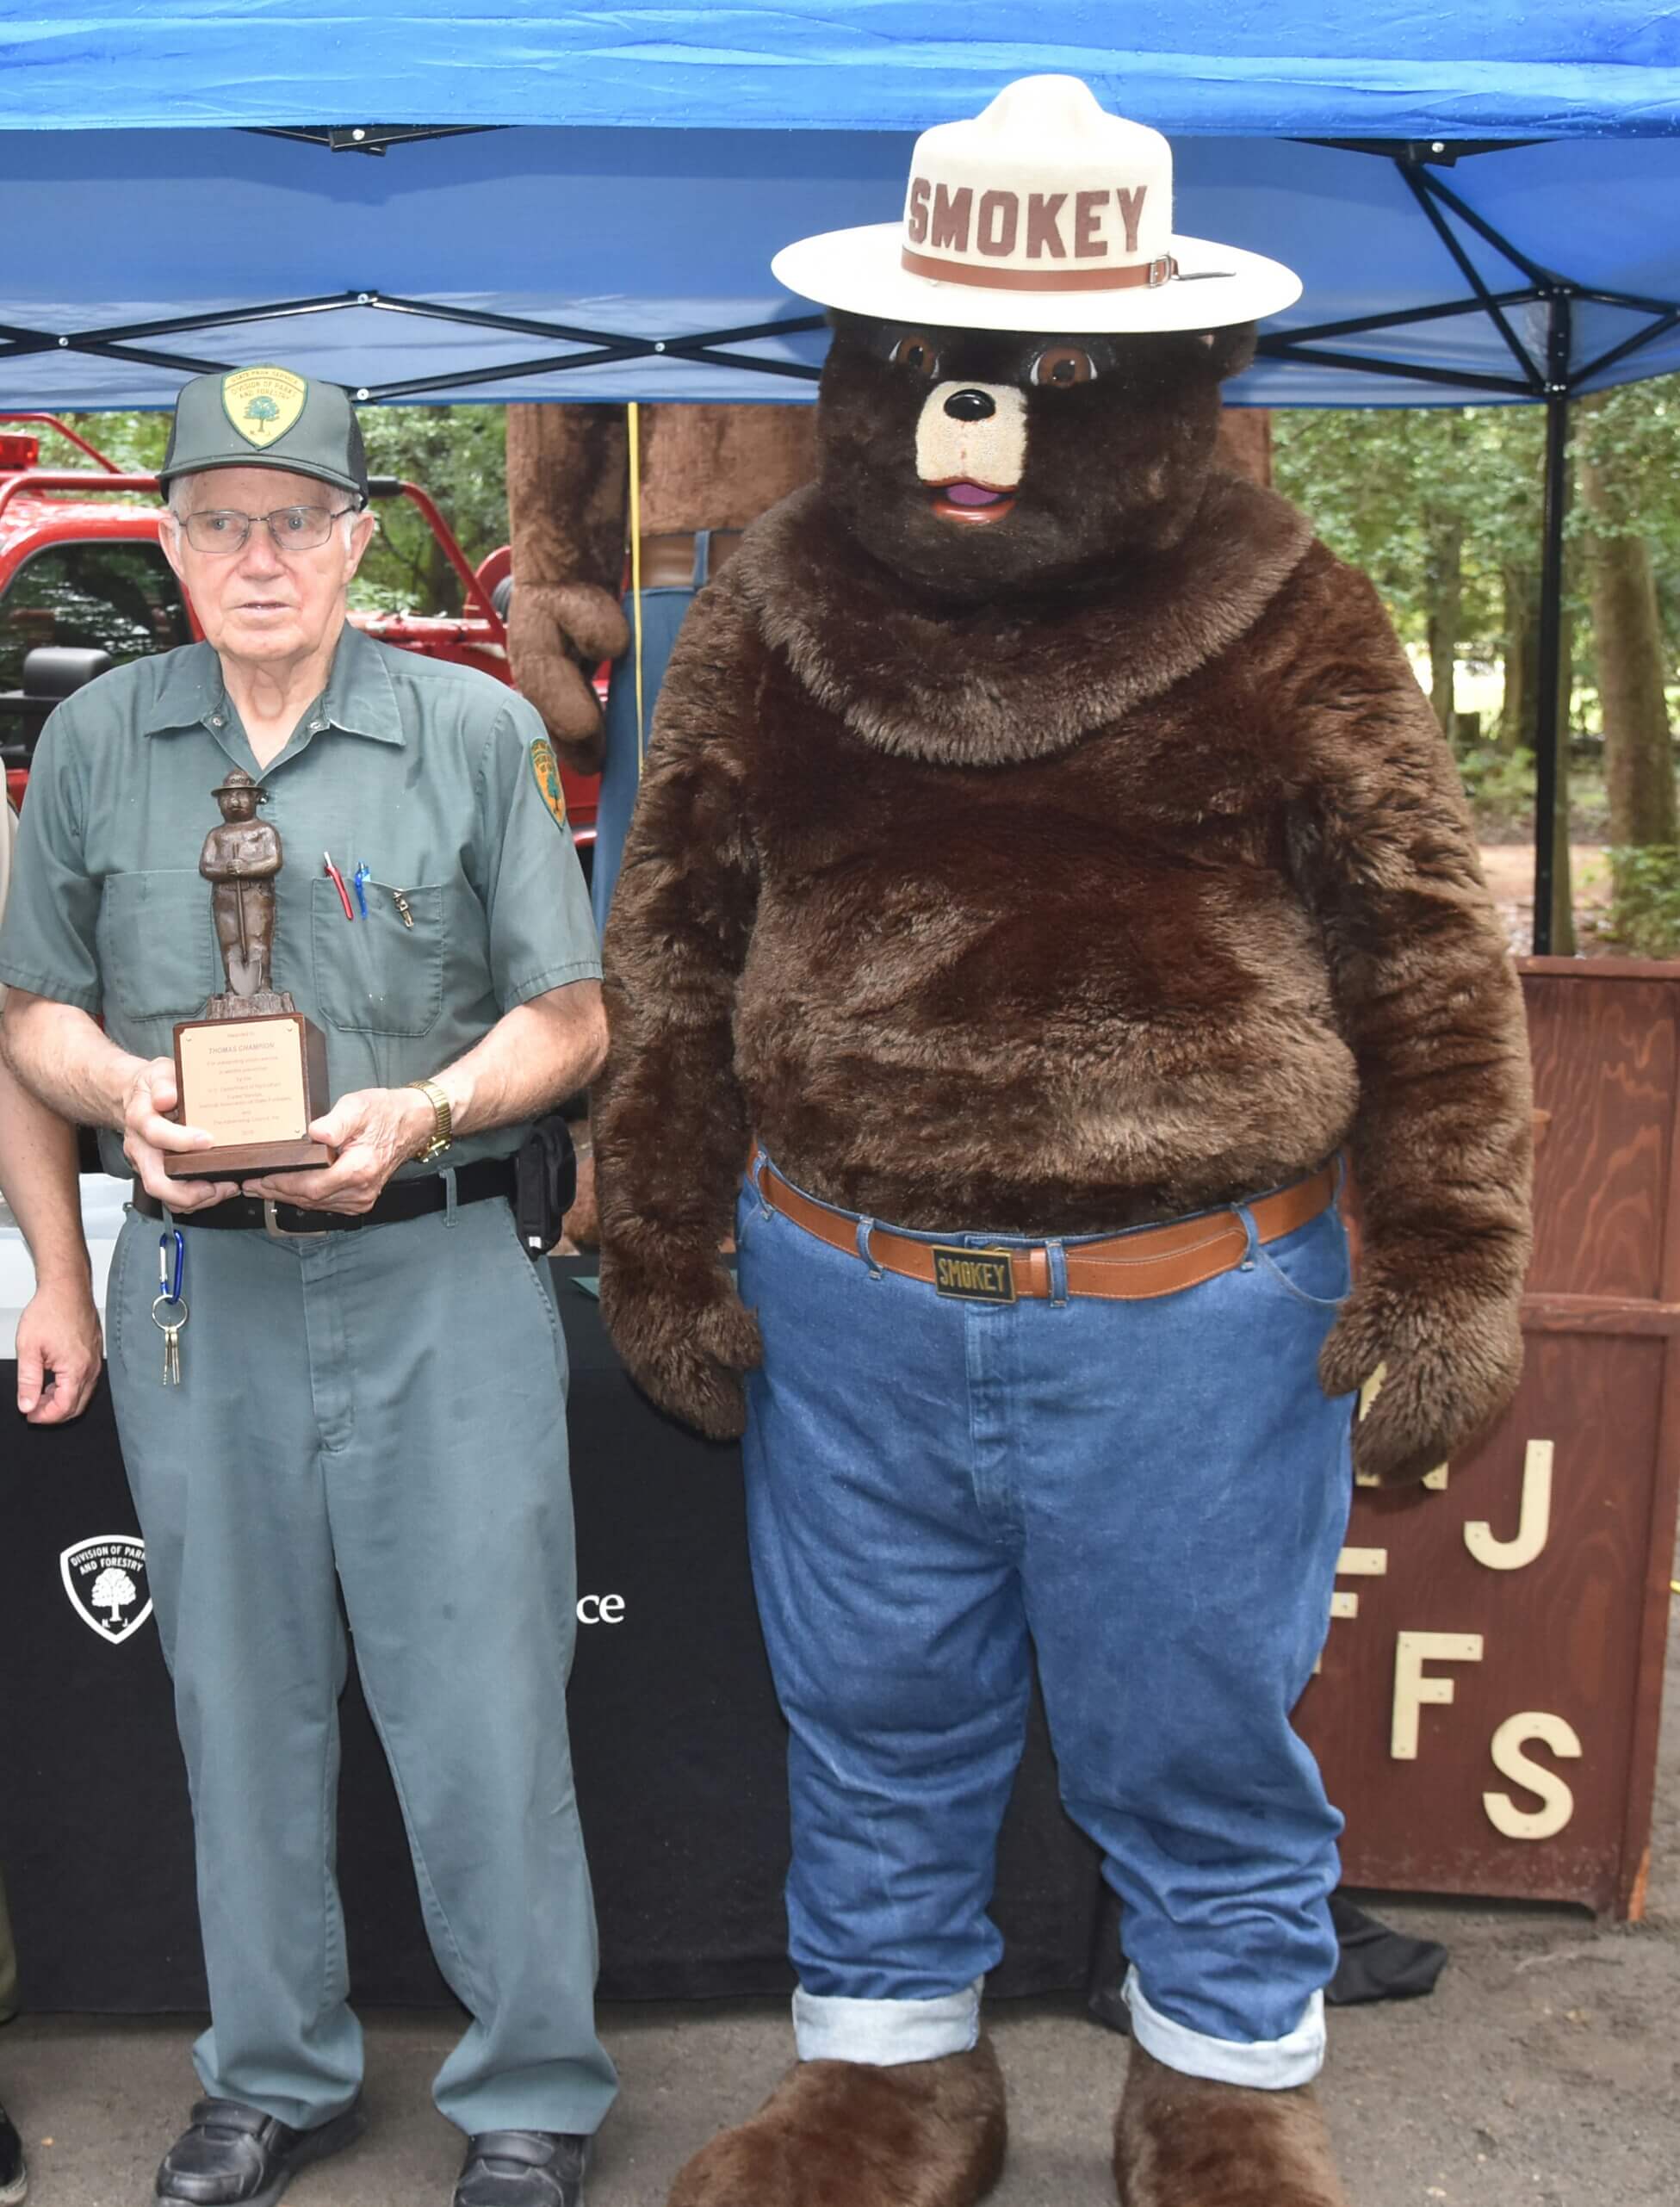 Tom Champion receives a bronze Smokey Bear award recognizing his efforts regarding fire prevention.